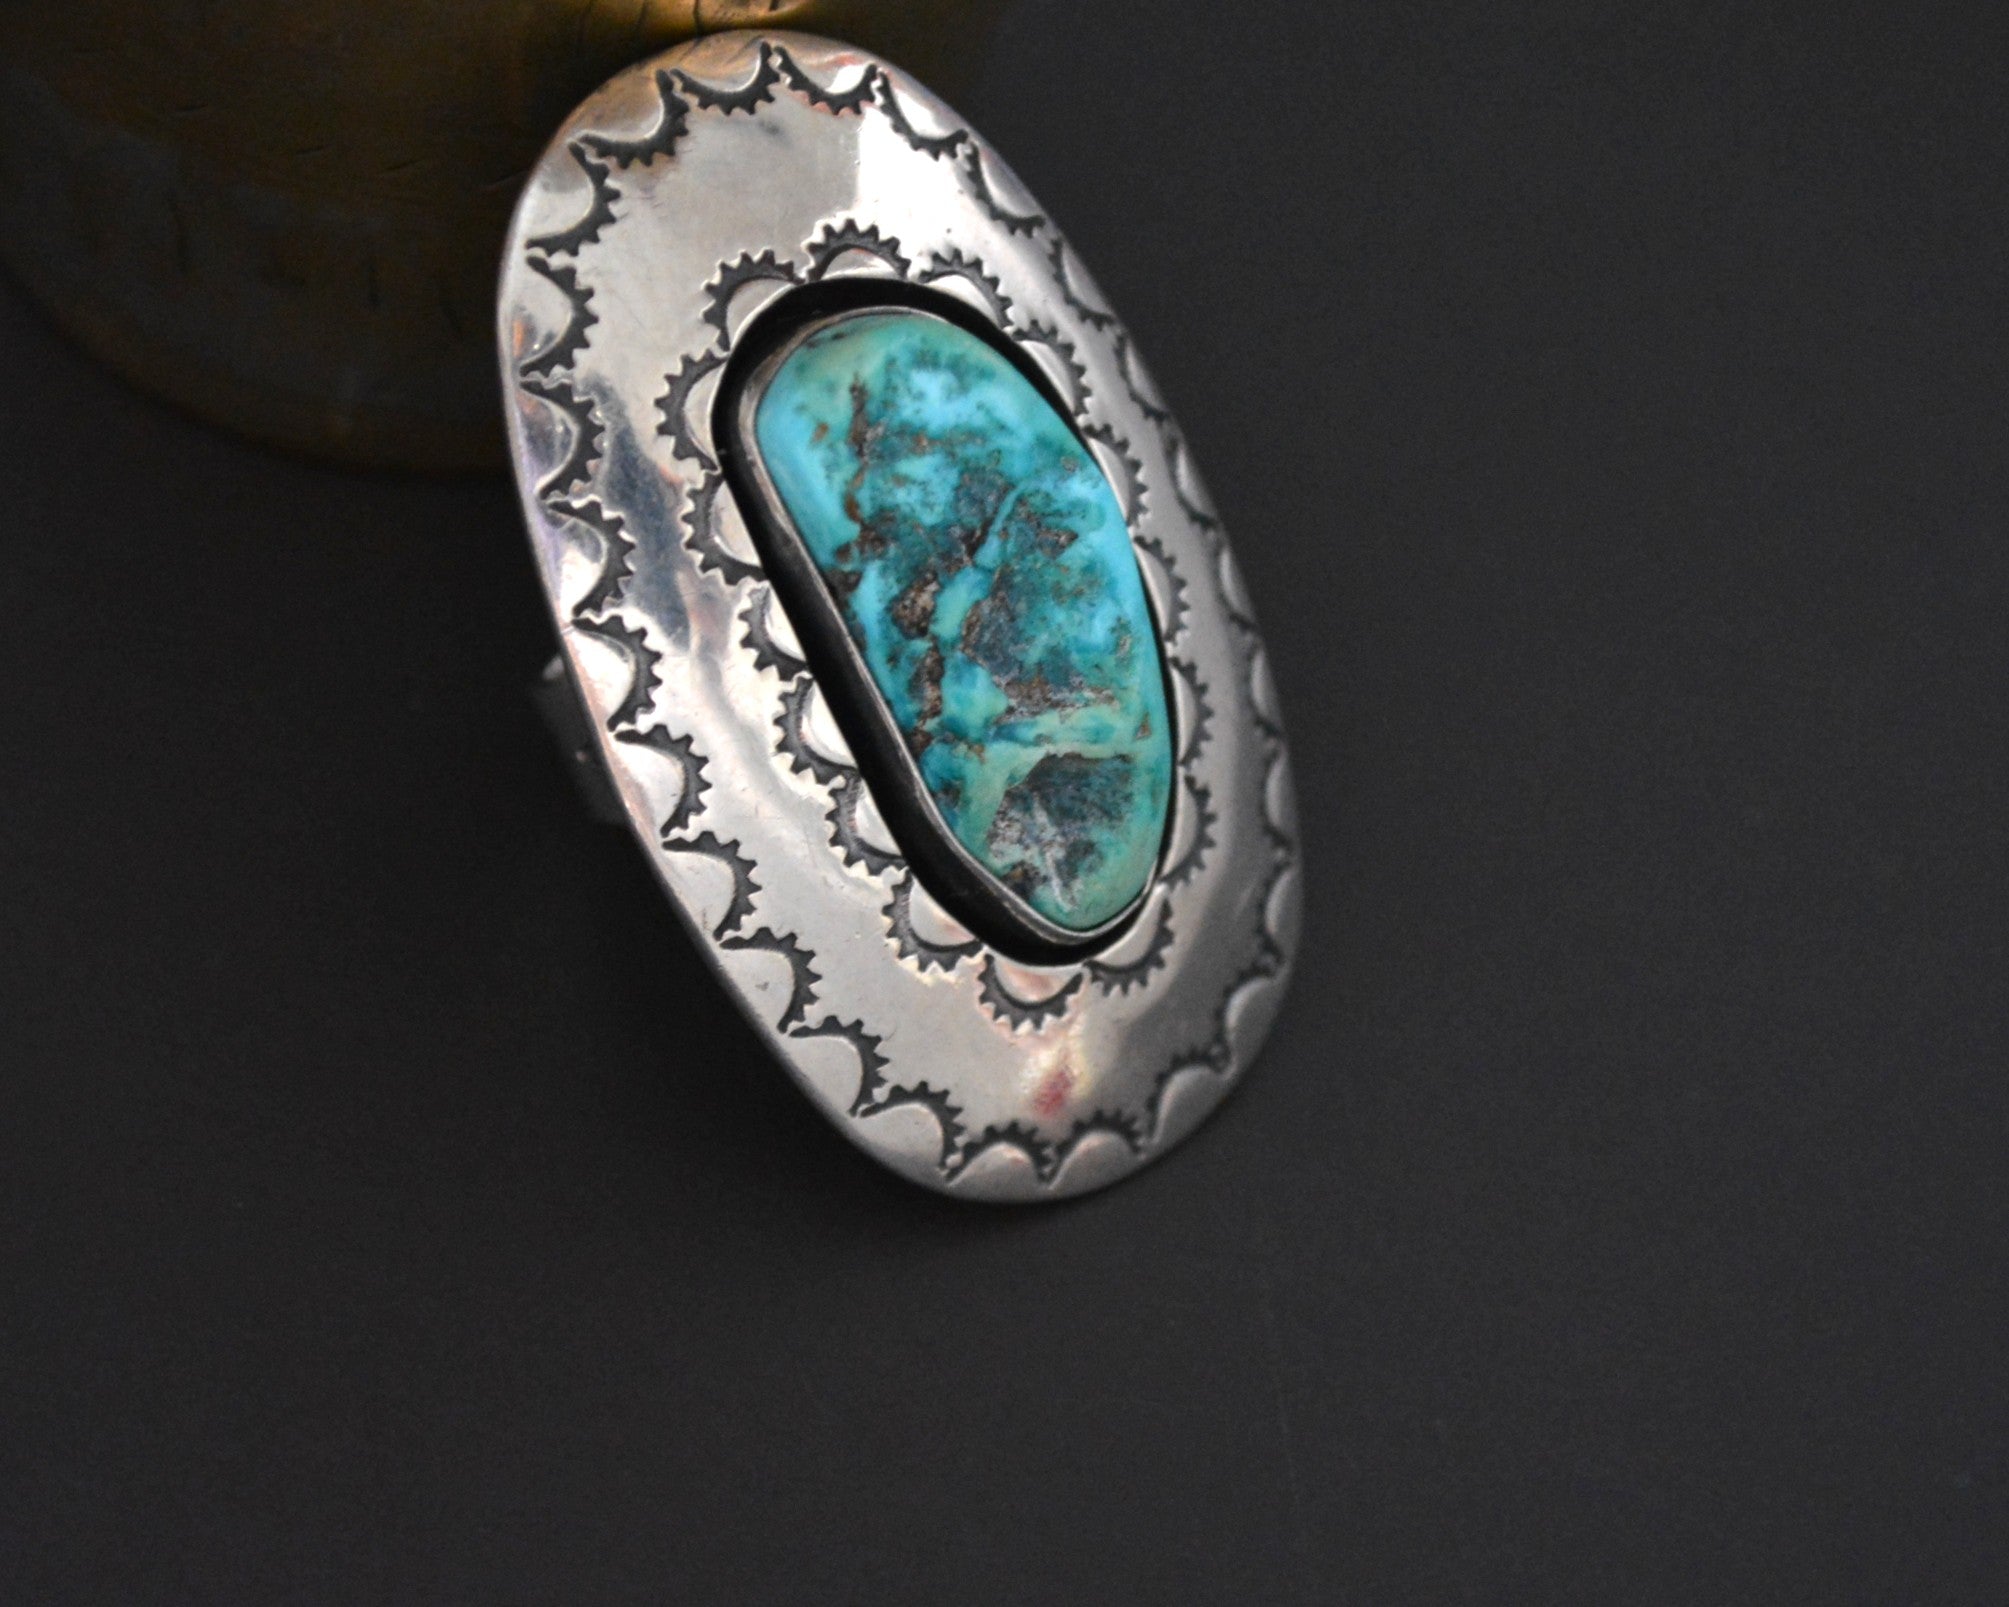 Splendid Native American Turquoise Ring - Size 8.5